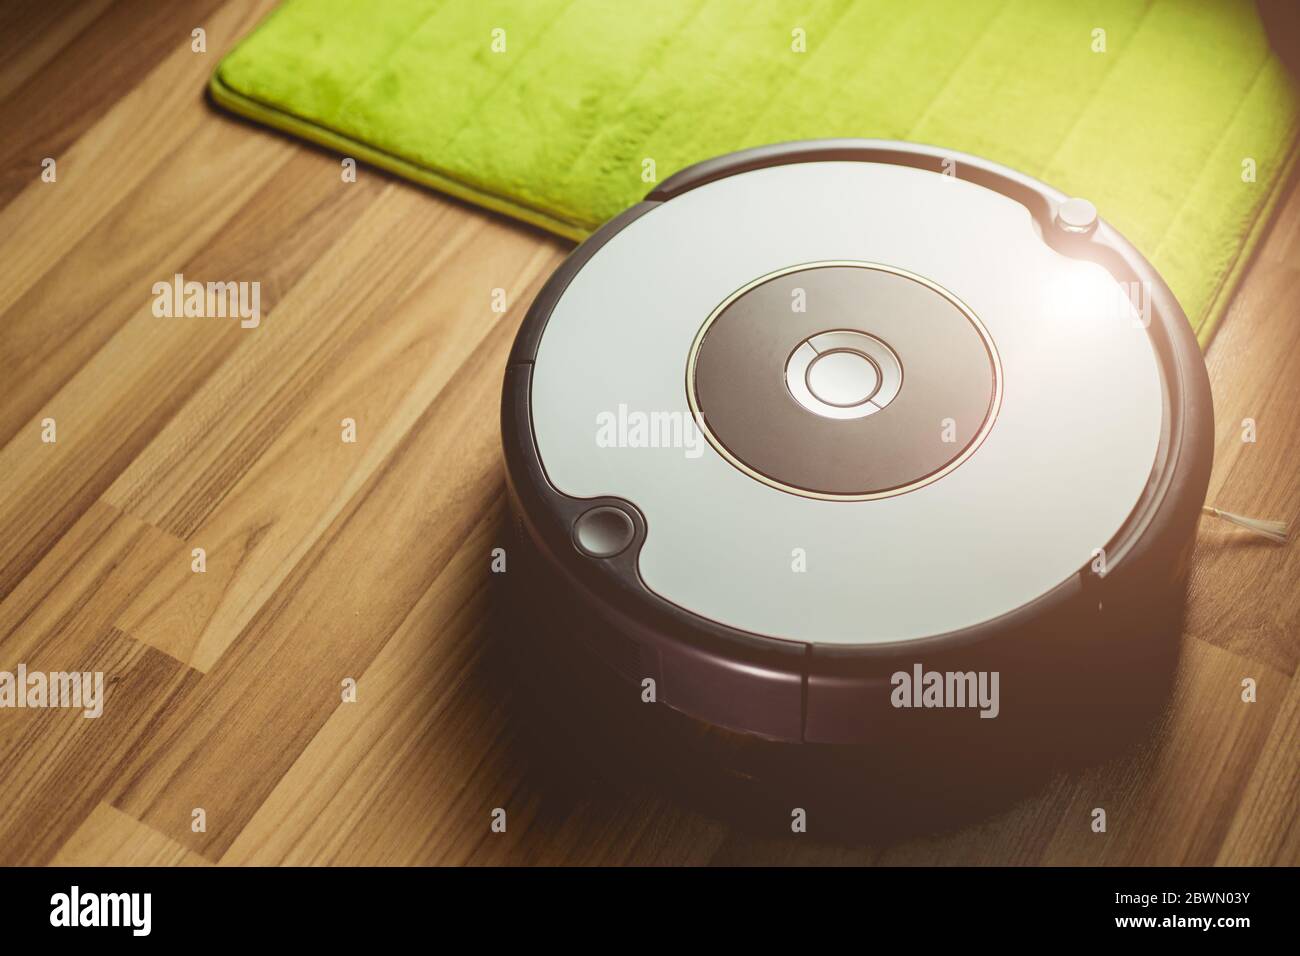 Robot limpiador fotografías e imágenes de alta resolución - Alamy